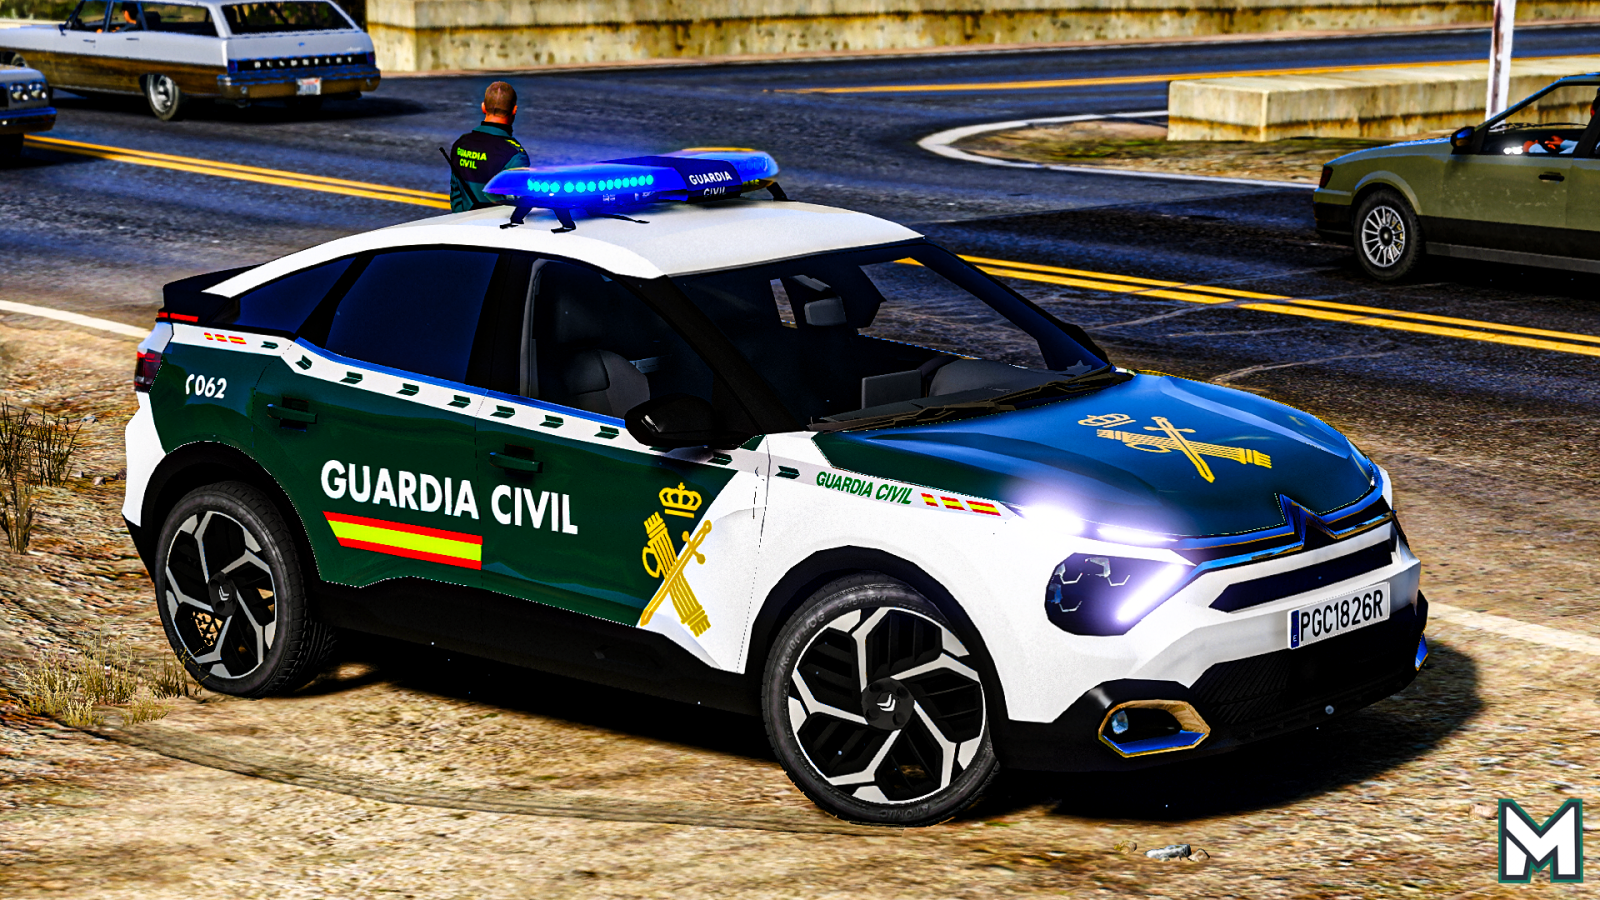 Citroën C4 Guardia civil